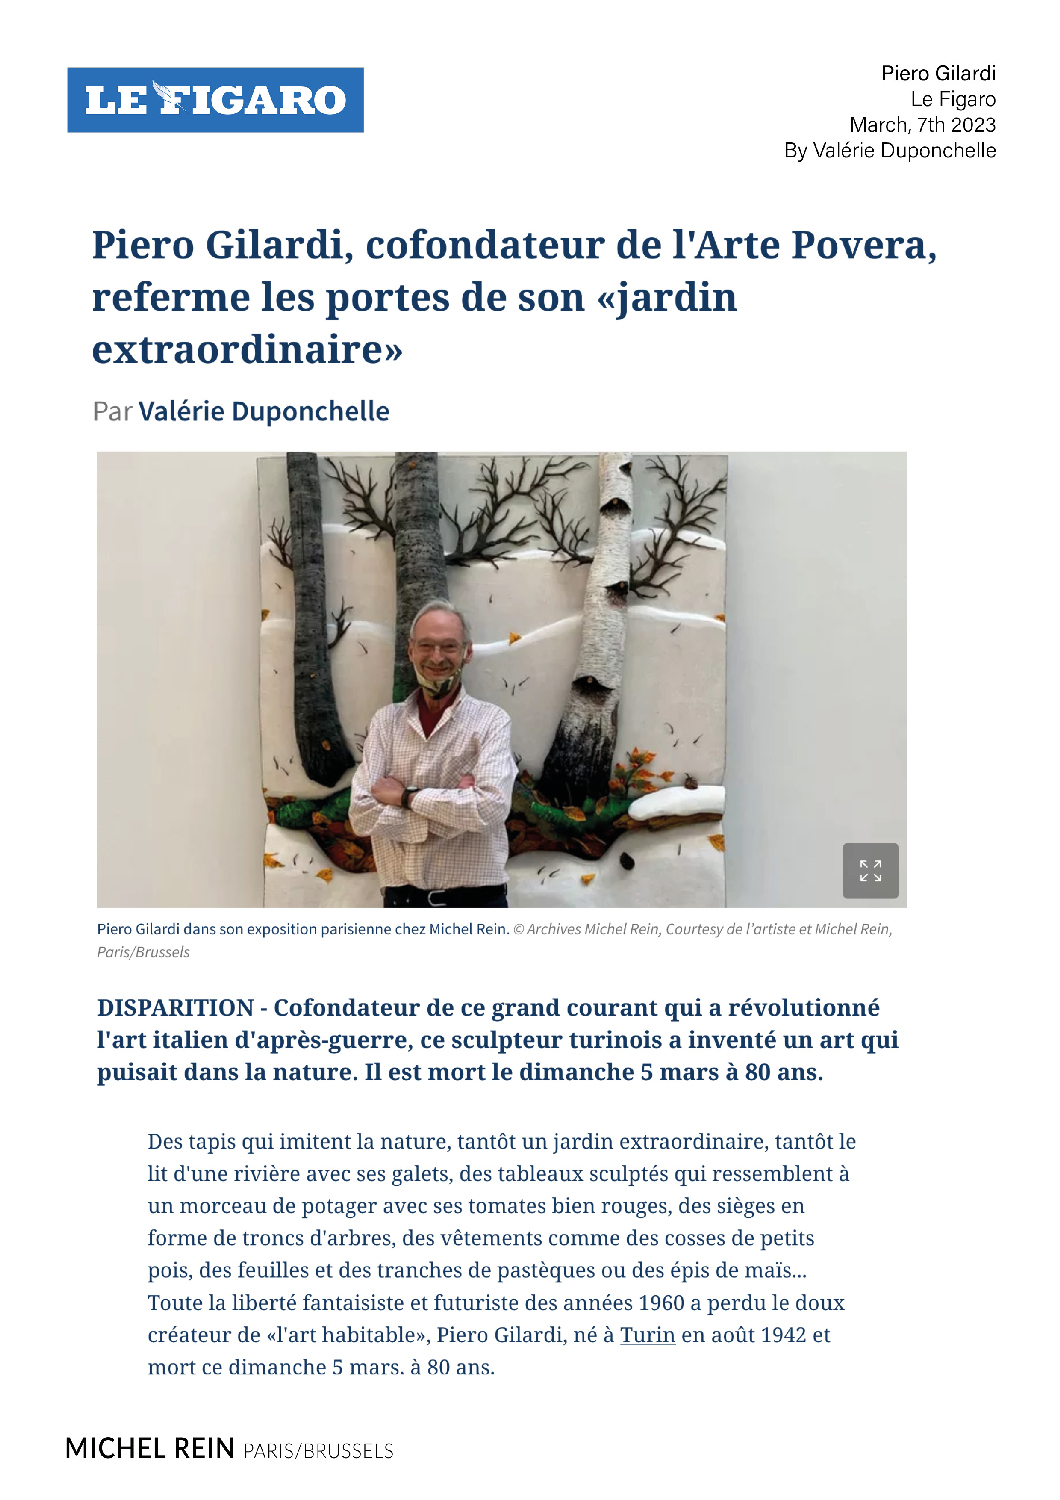 Piero Gilardi, cofondateur de l'Arte Povera - Le Figaro